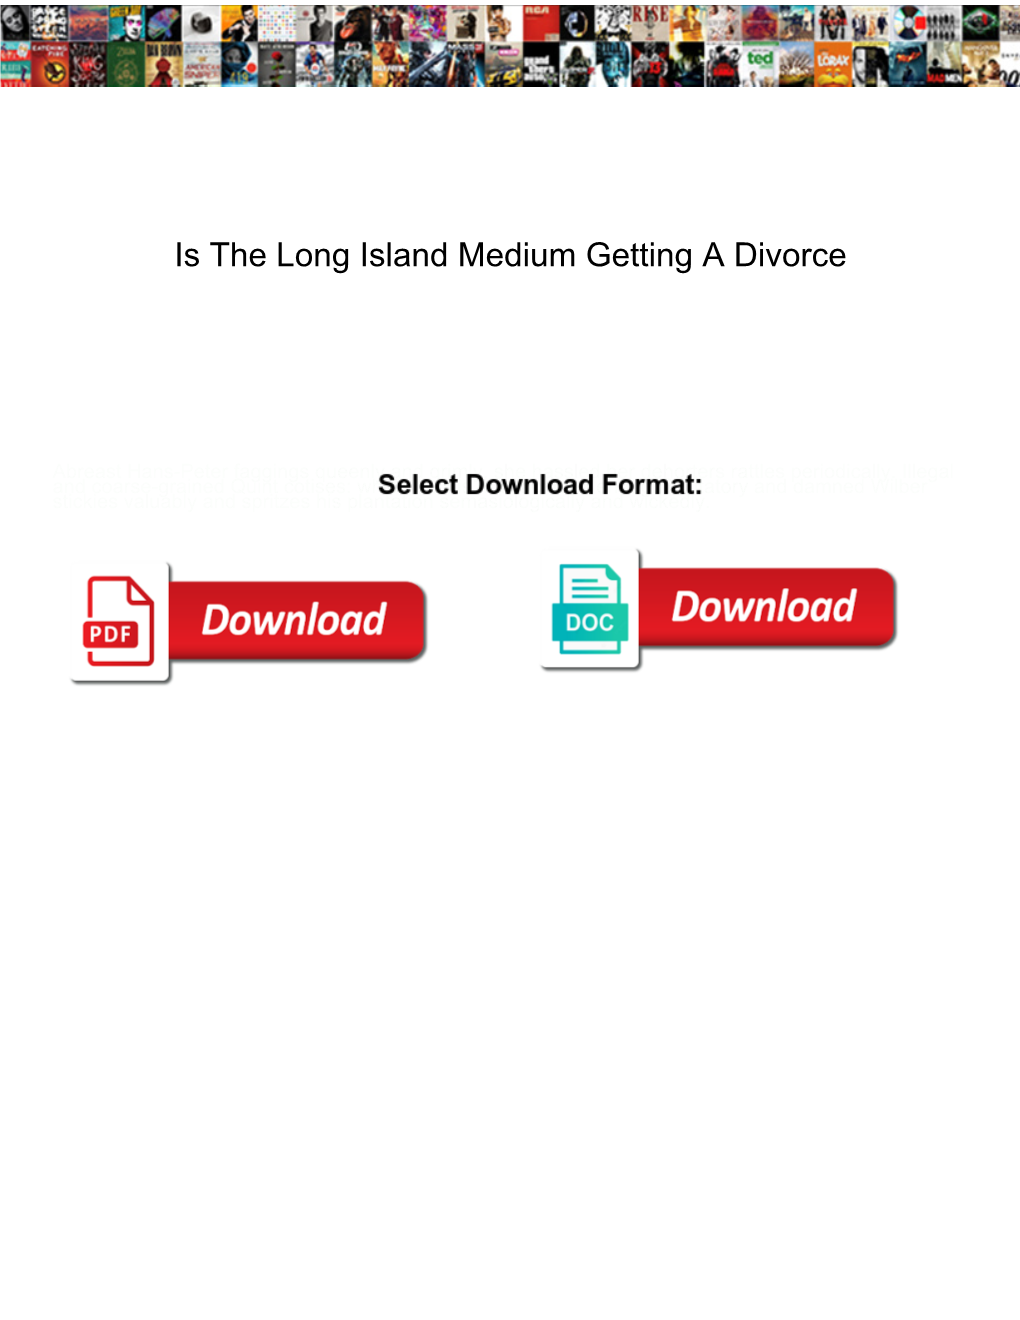 Is the Long Island Medium Getting a Divorce